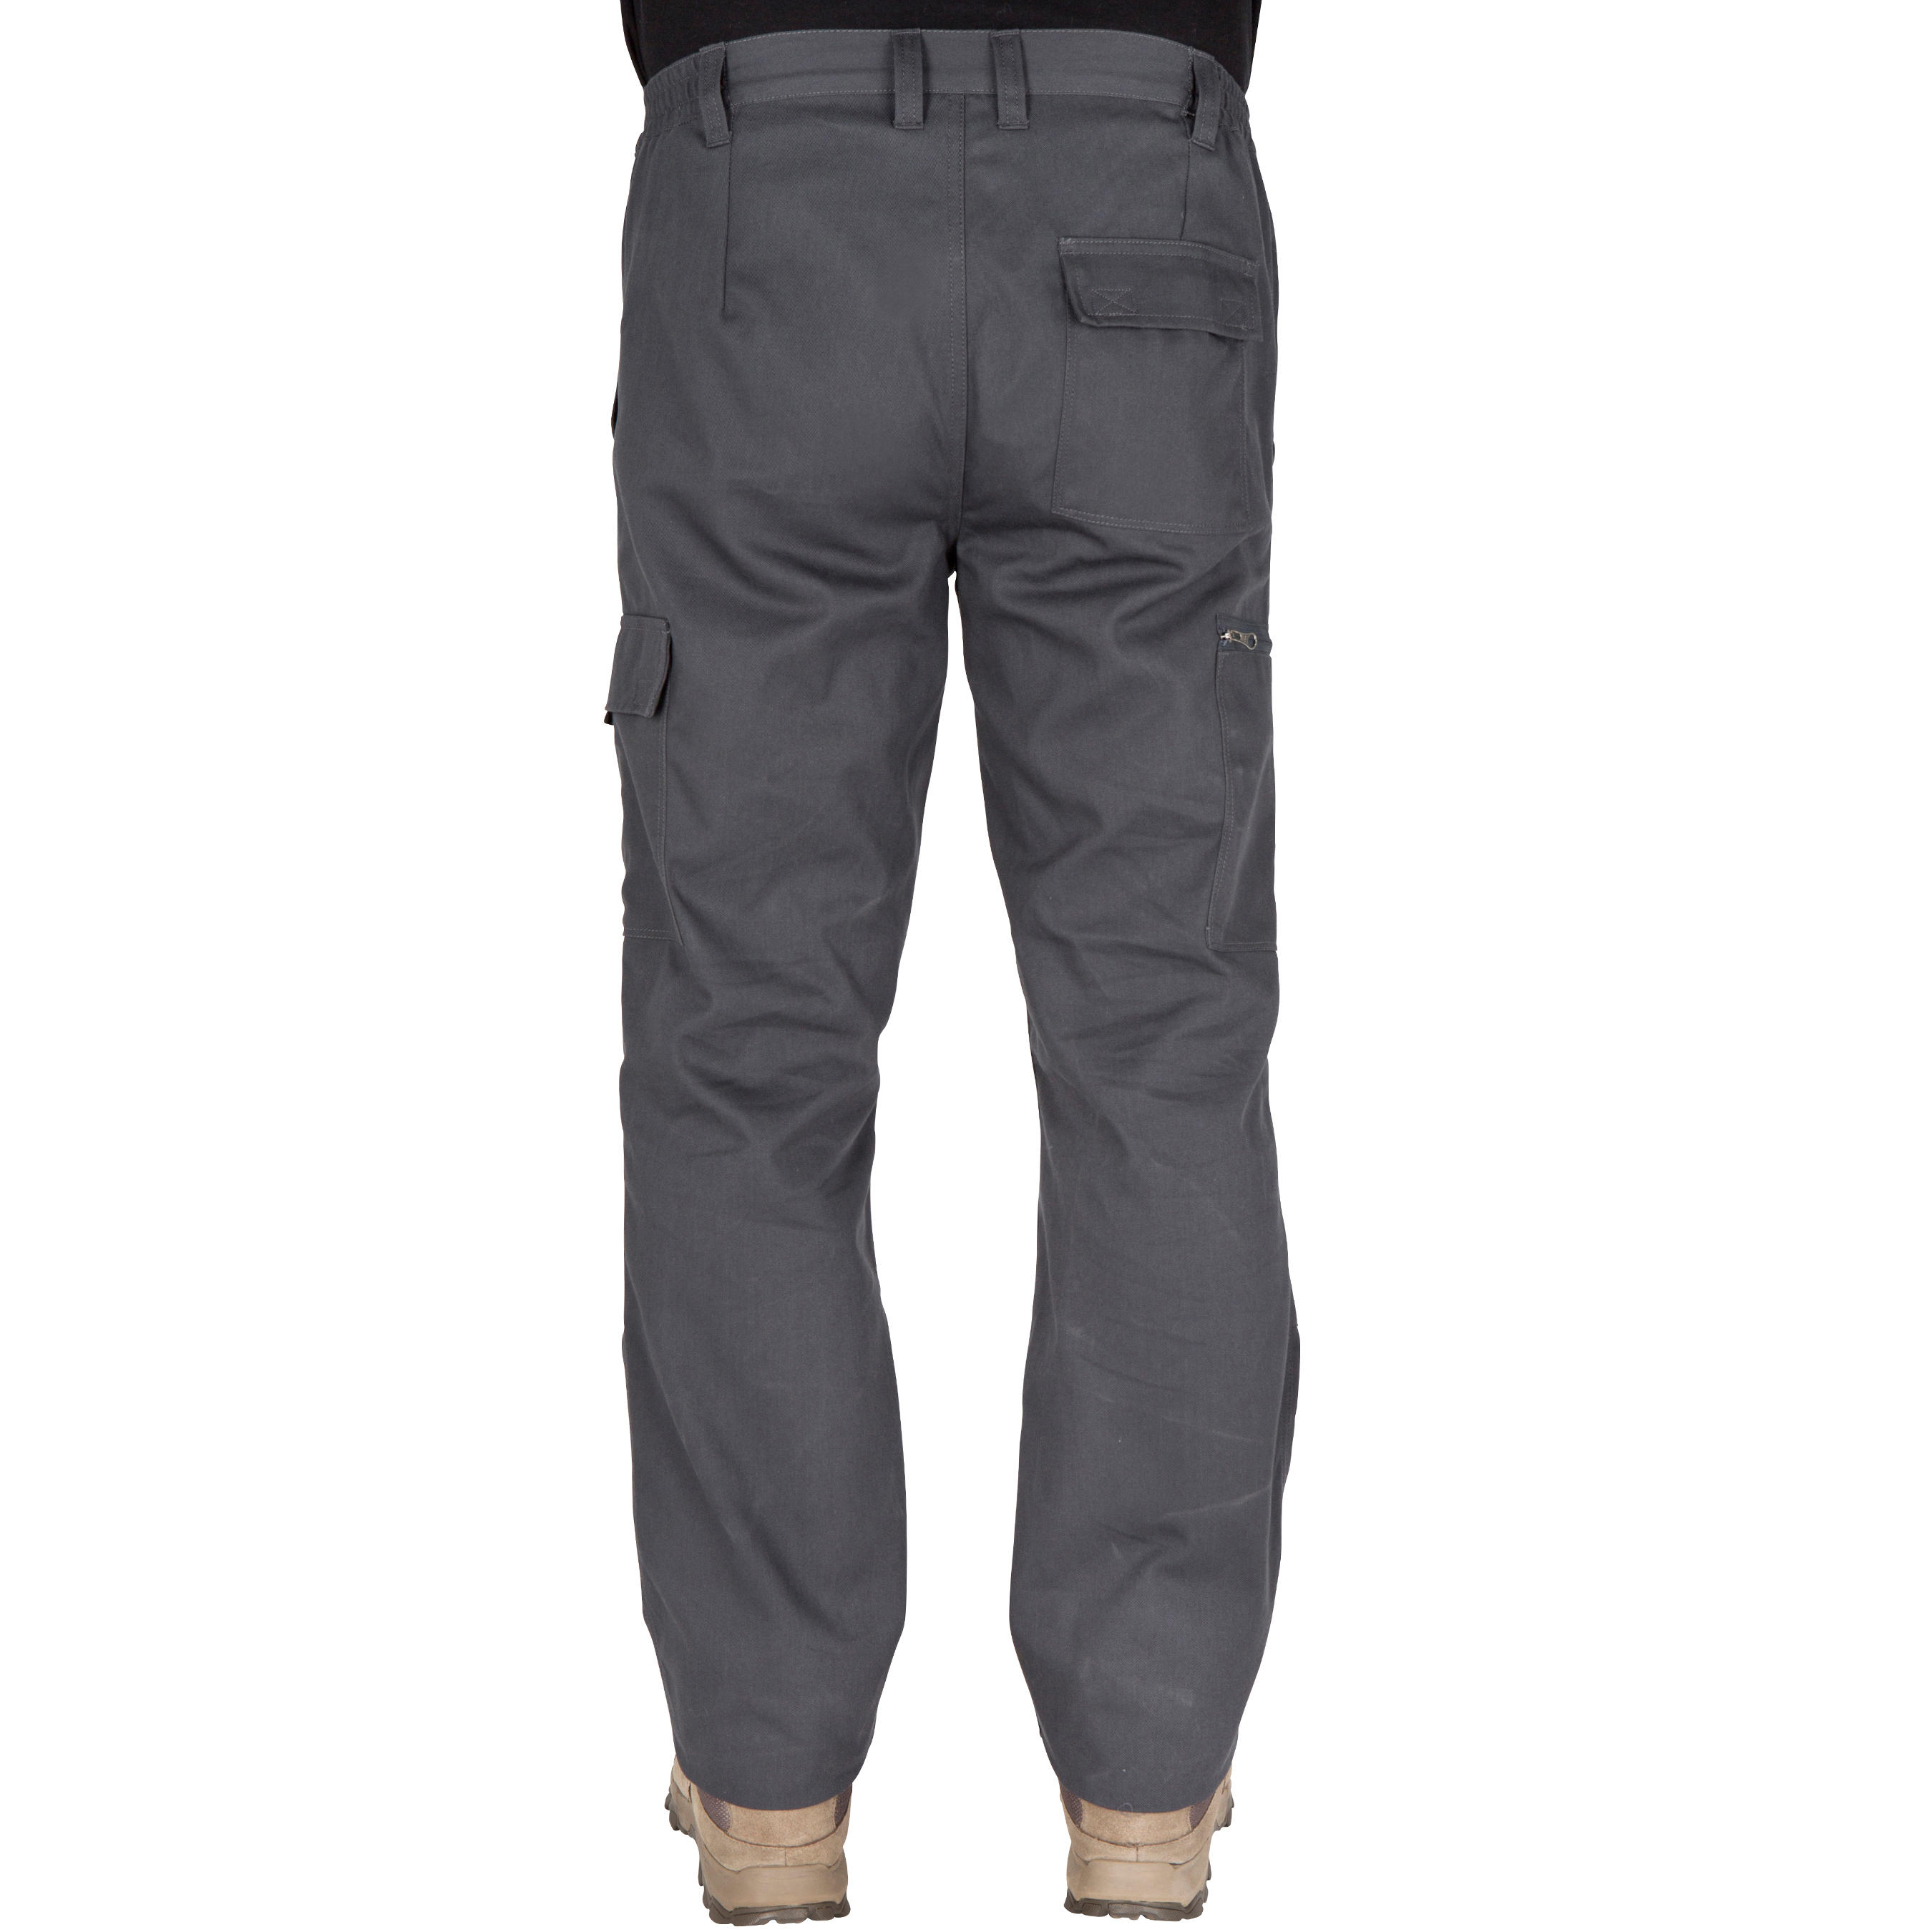 Sapper Cargos  Buy Sapper 8 Pocket Cargo Pants For Men  Brown Online   Nykaa Fashion